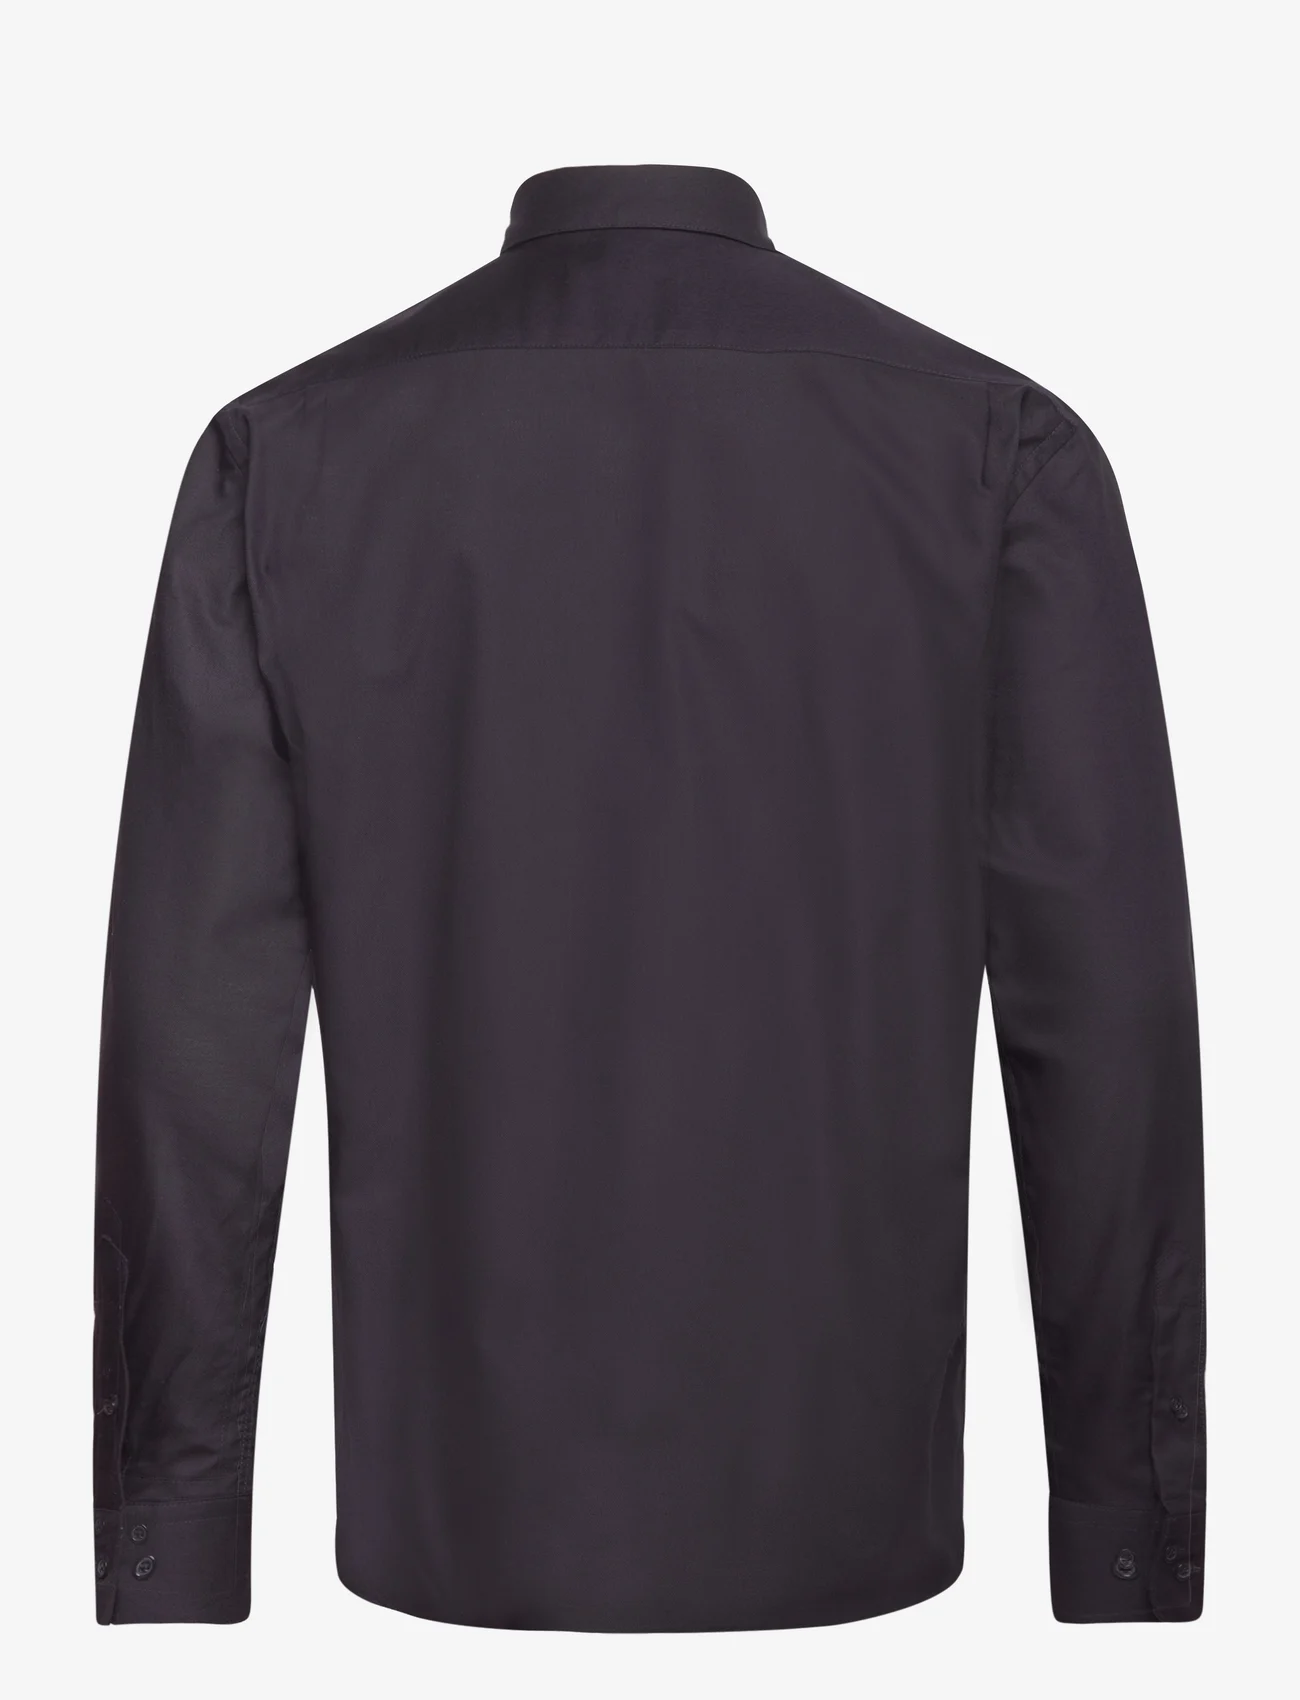 Mads Nørgaard - Cotton Oxford Sune Shirt BD - oxford stila krekli - deep well - 1